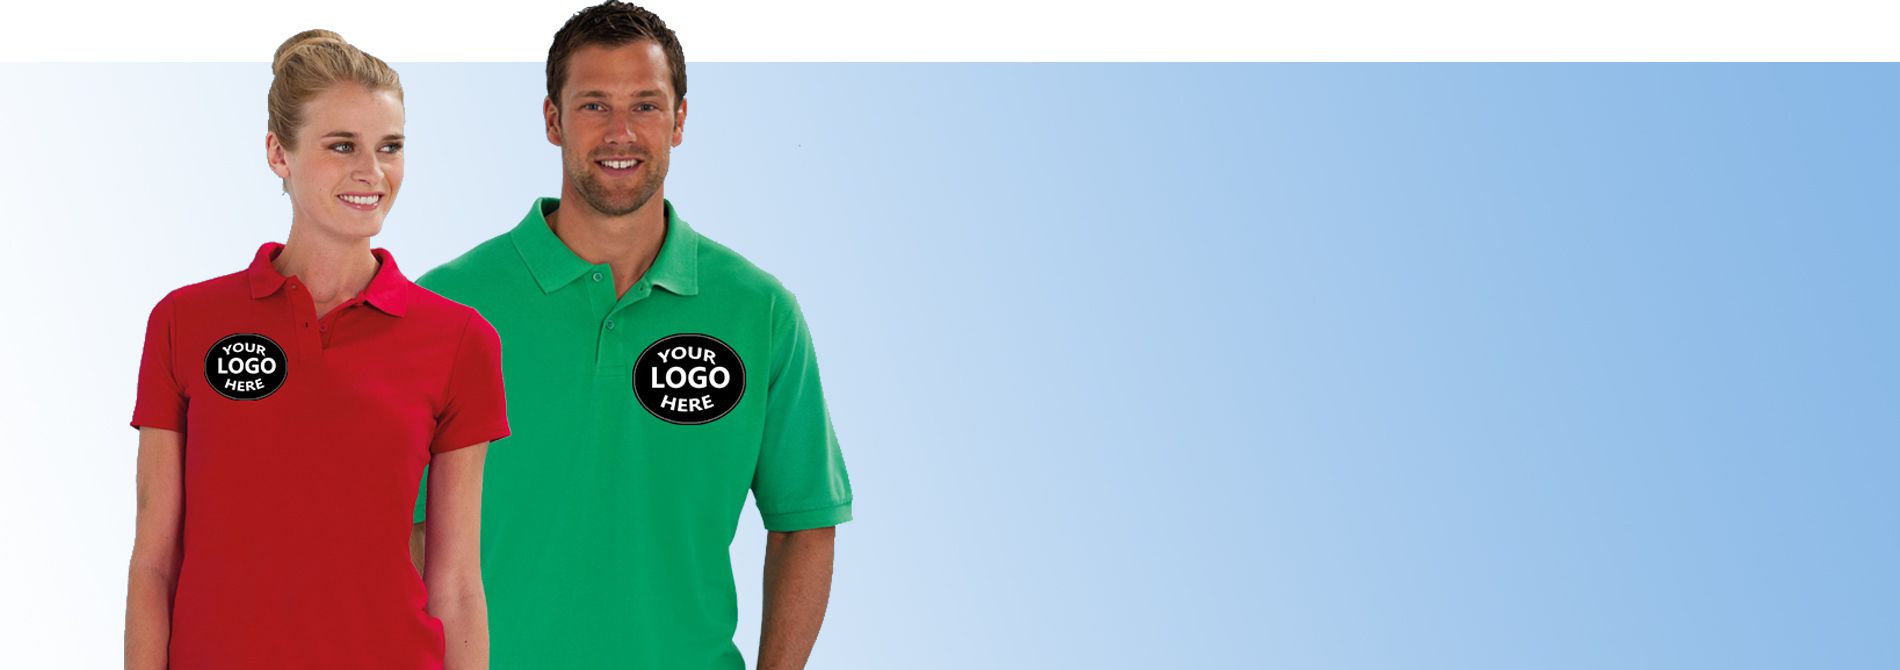 Personalised Polo Shirts